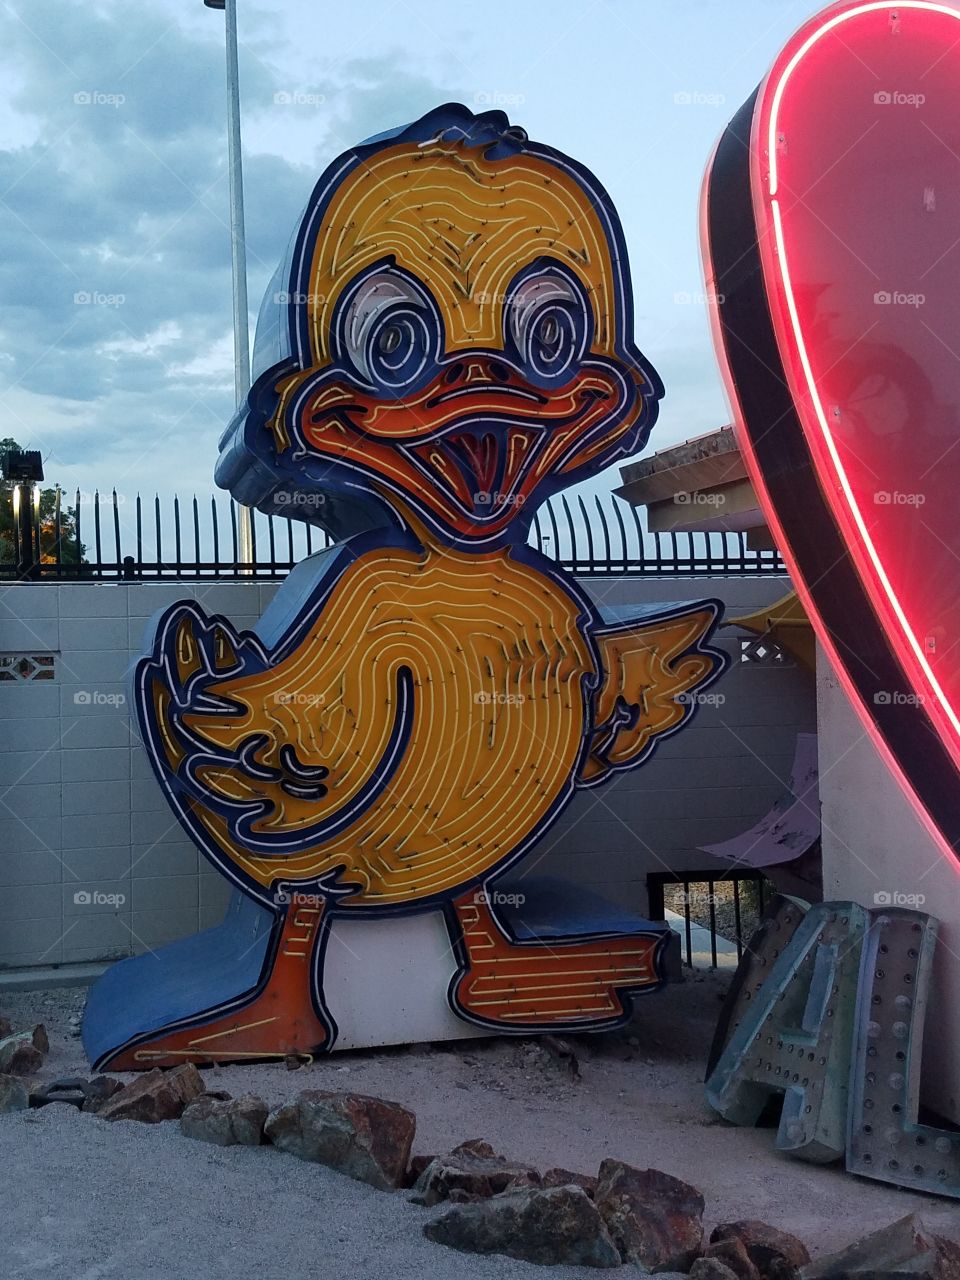 happy quacker 
friendly duck sign